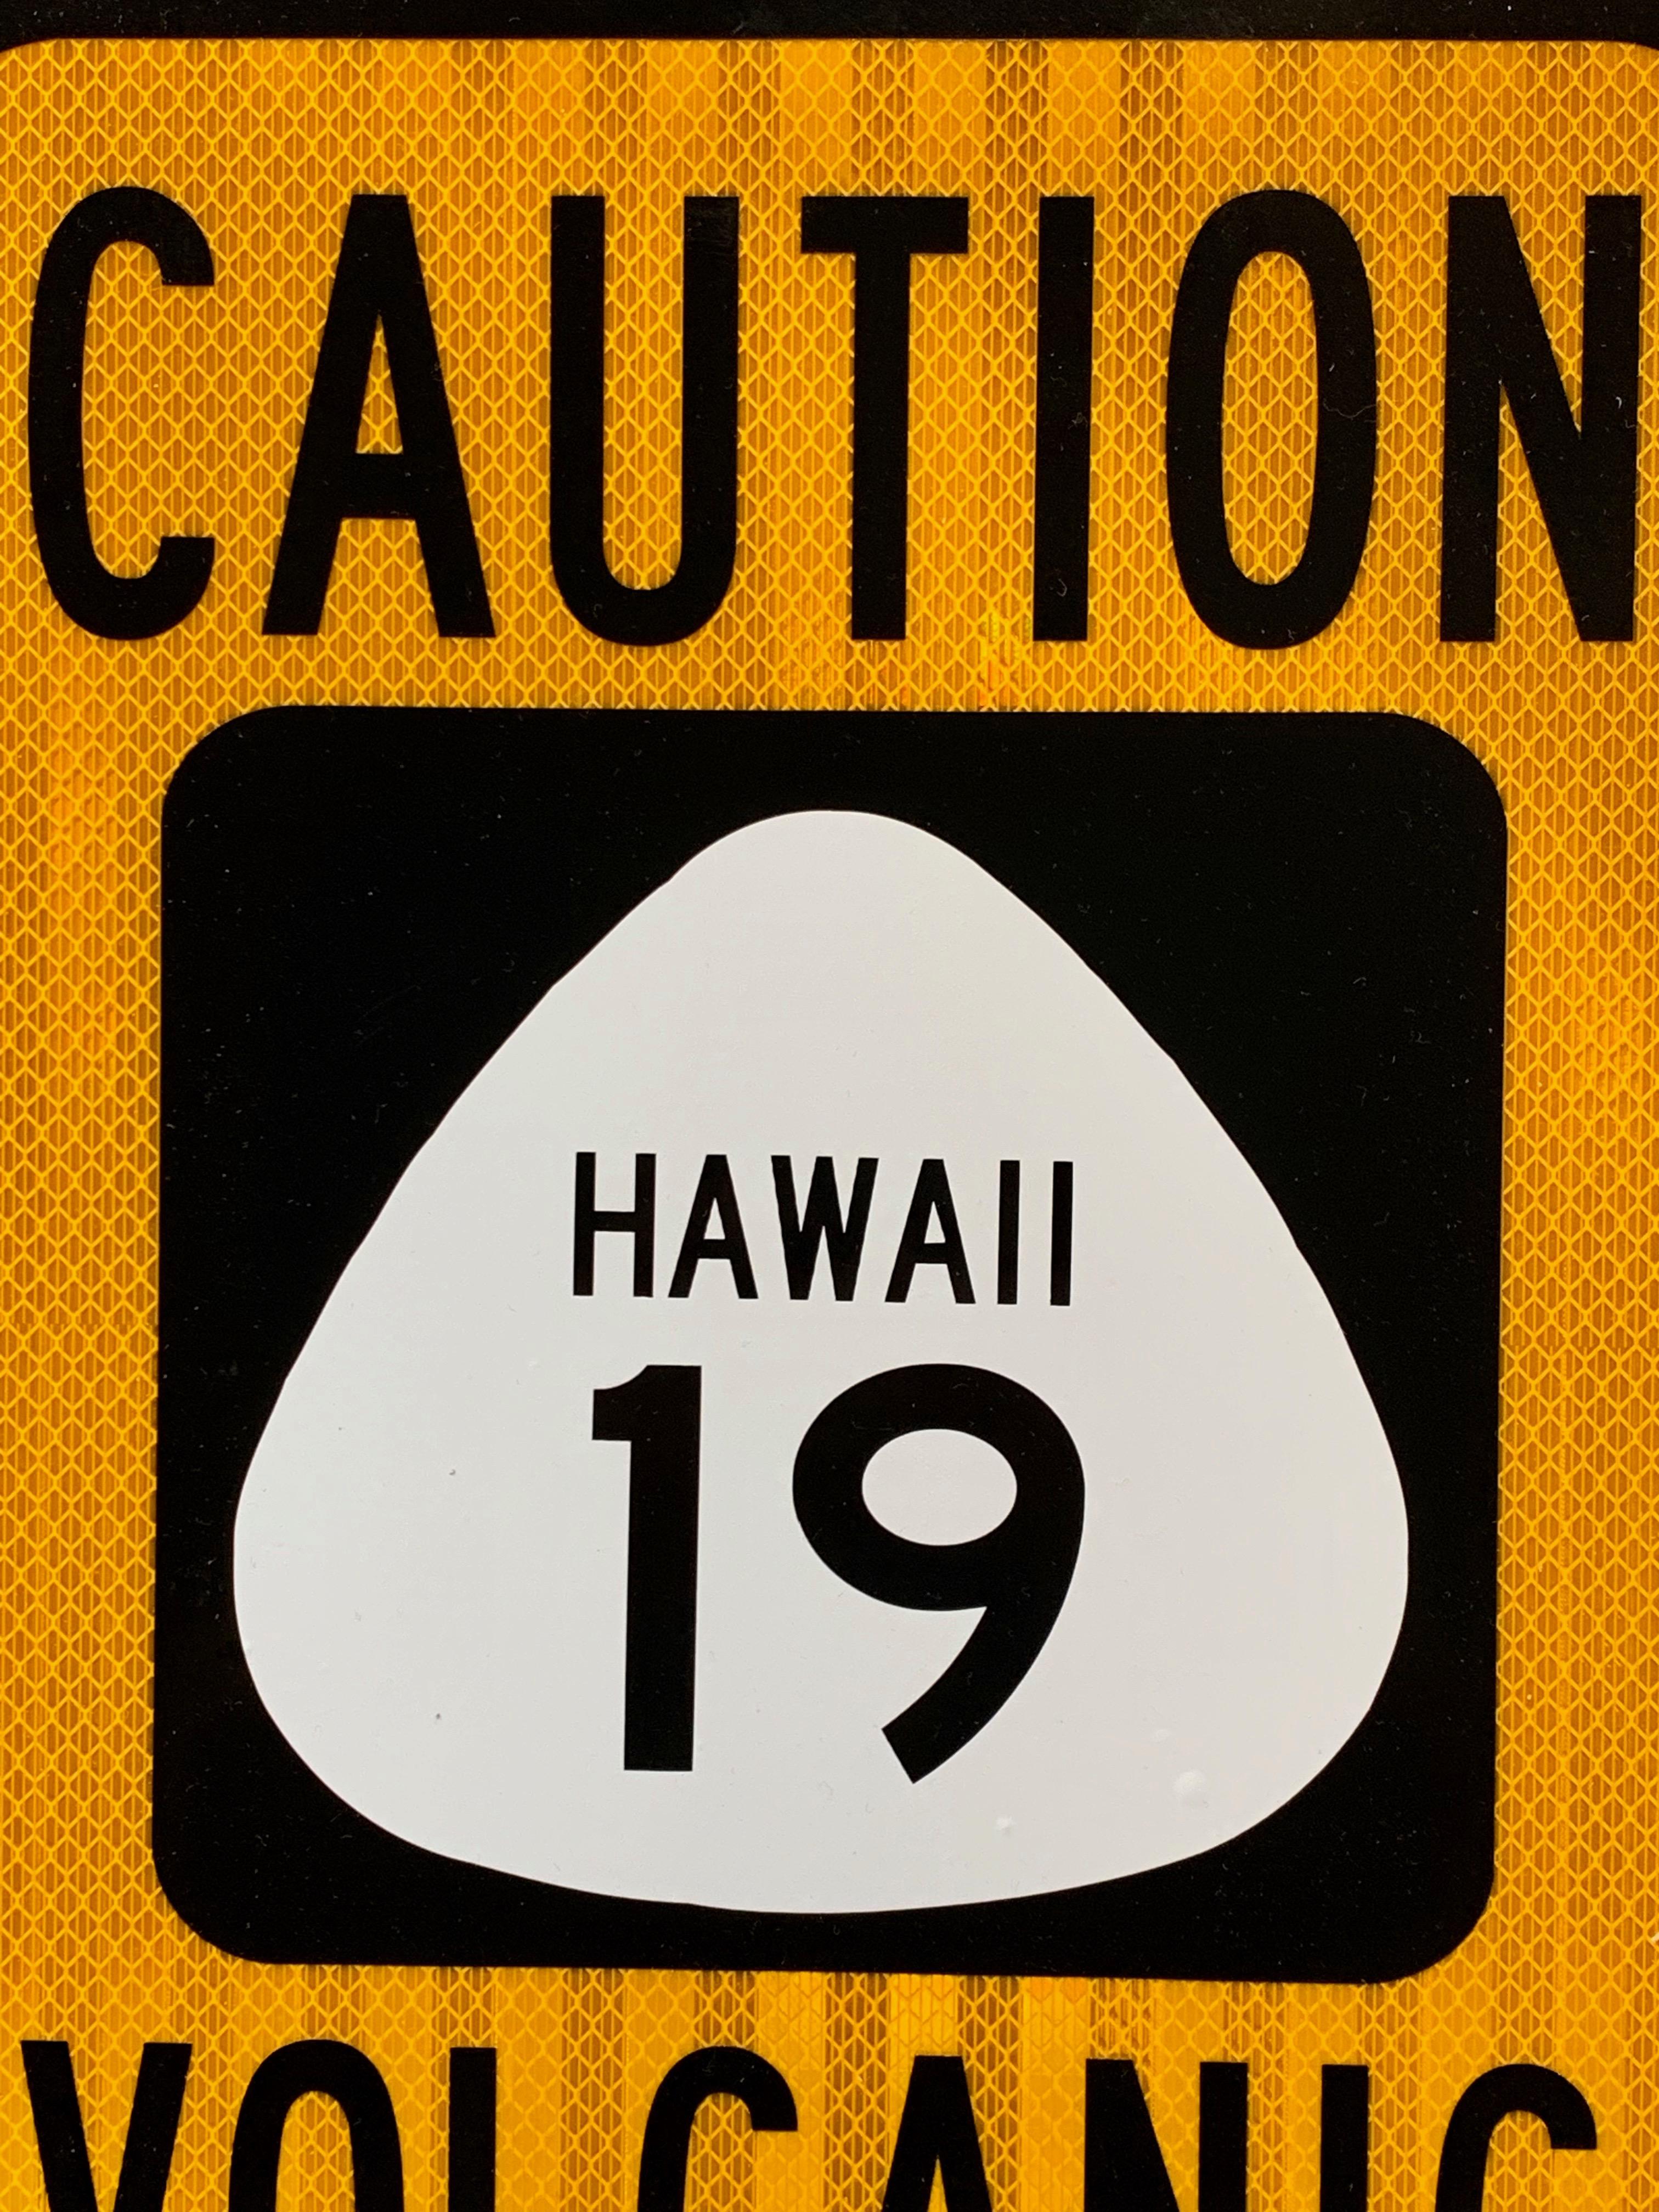 road signs in hawaii